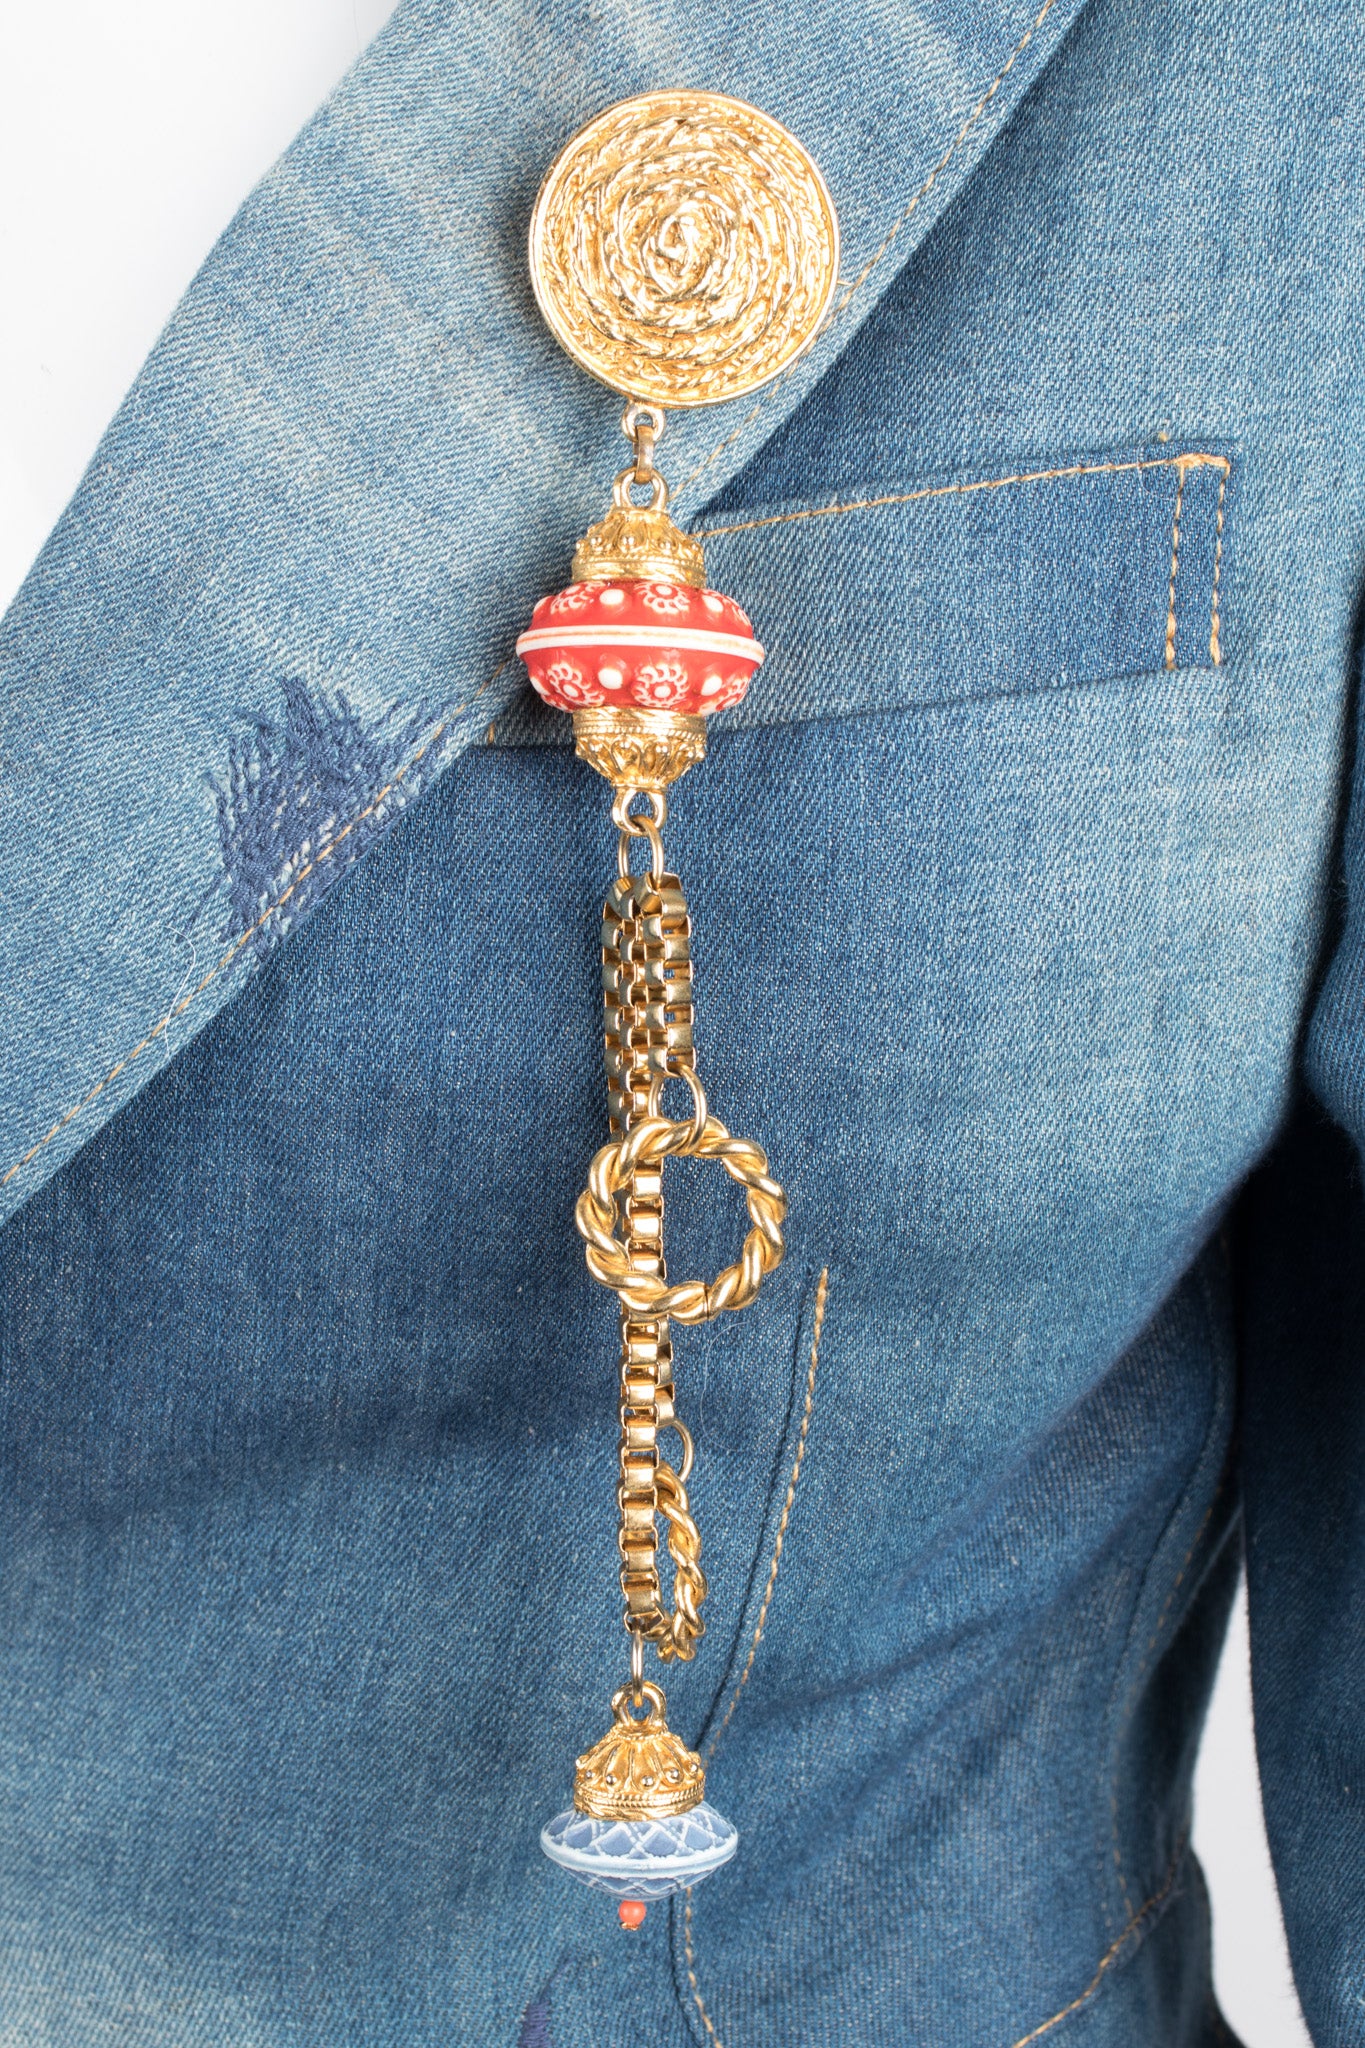 Magic Saucer Genie Vintage Charm Brooch